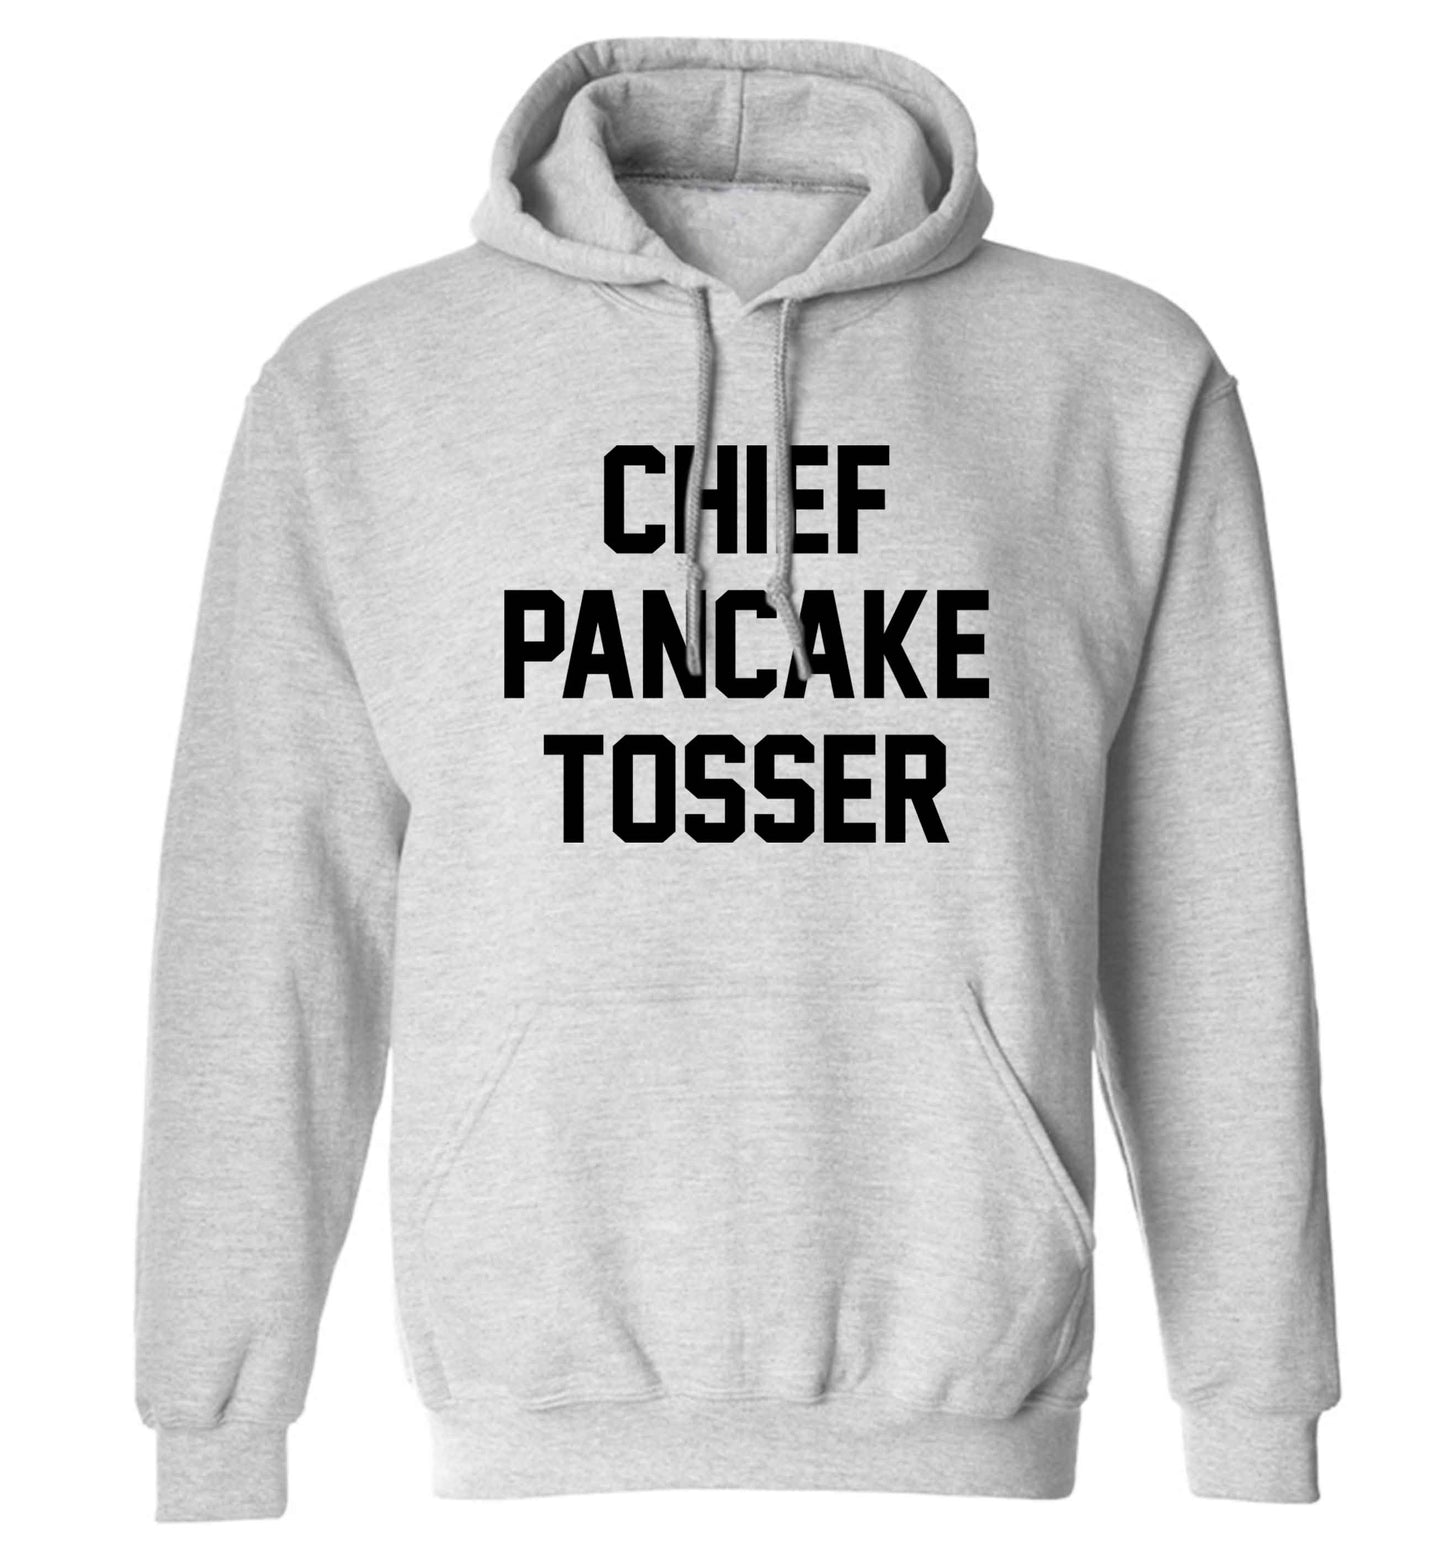 Chief pancake tosser adults unisex grey hoodie 2XL